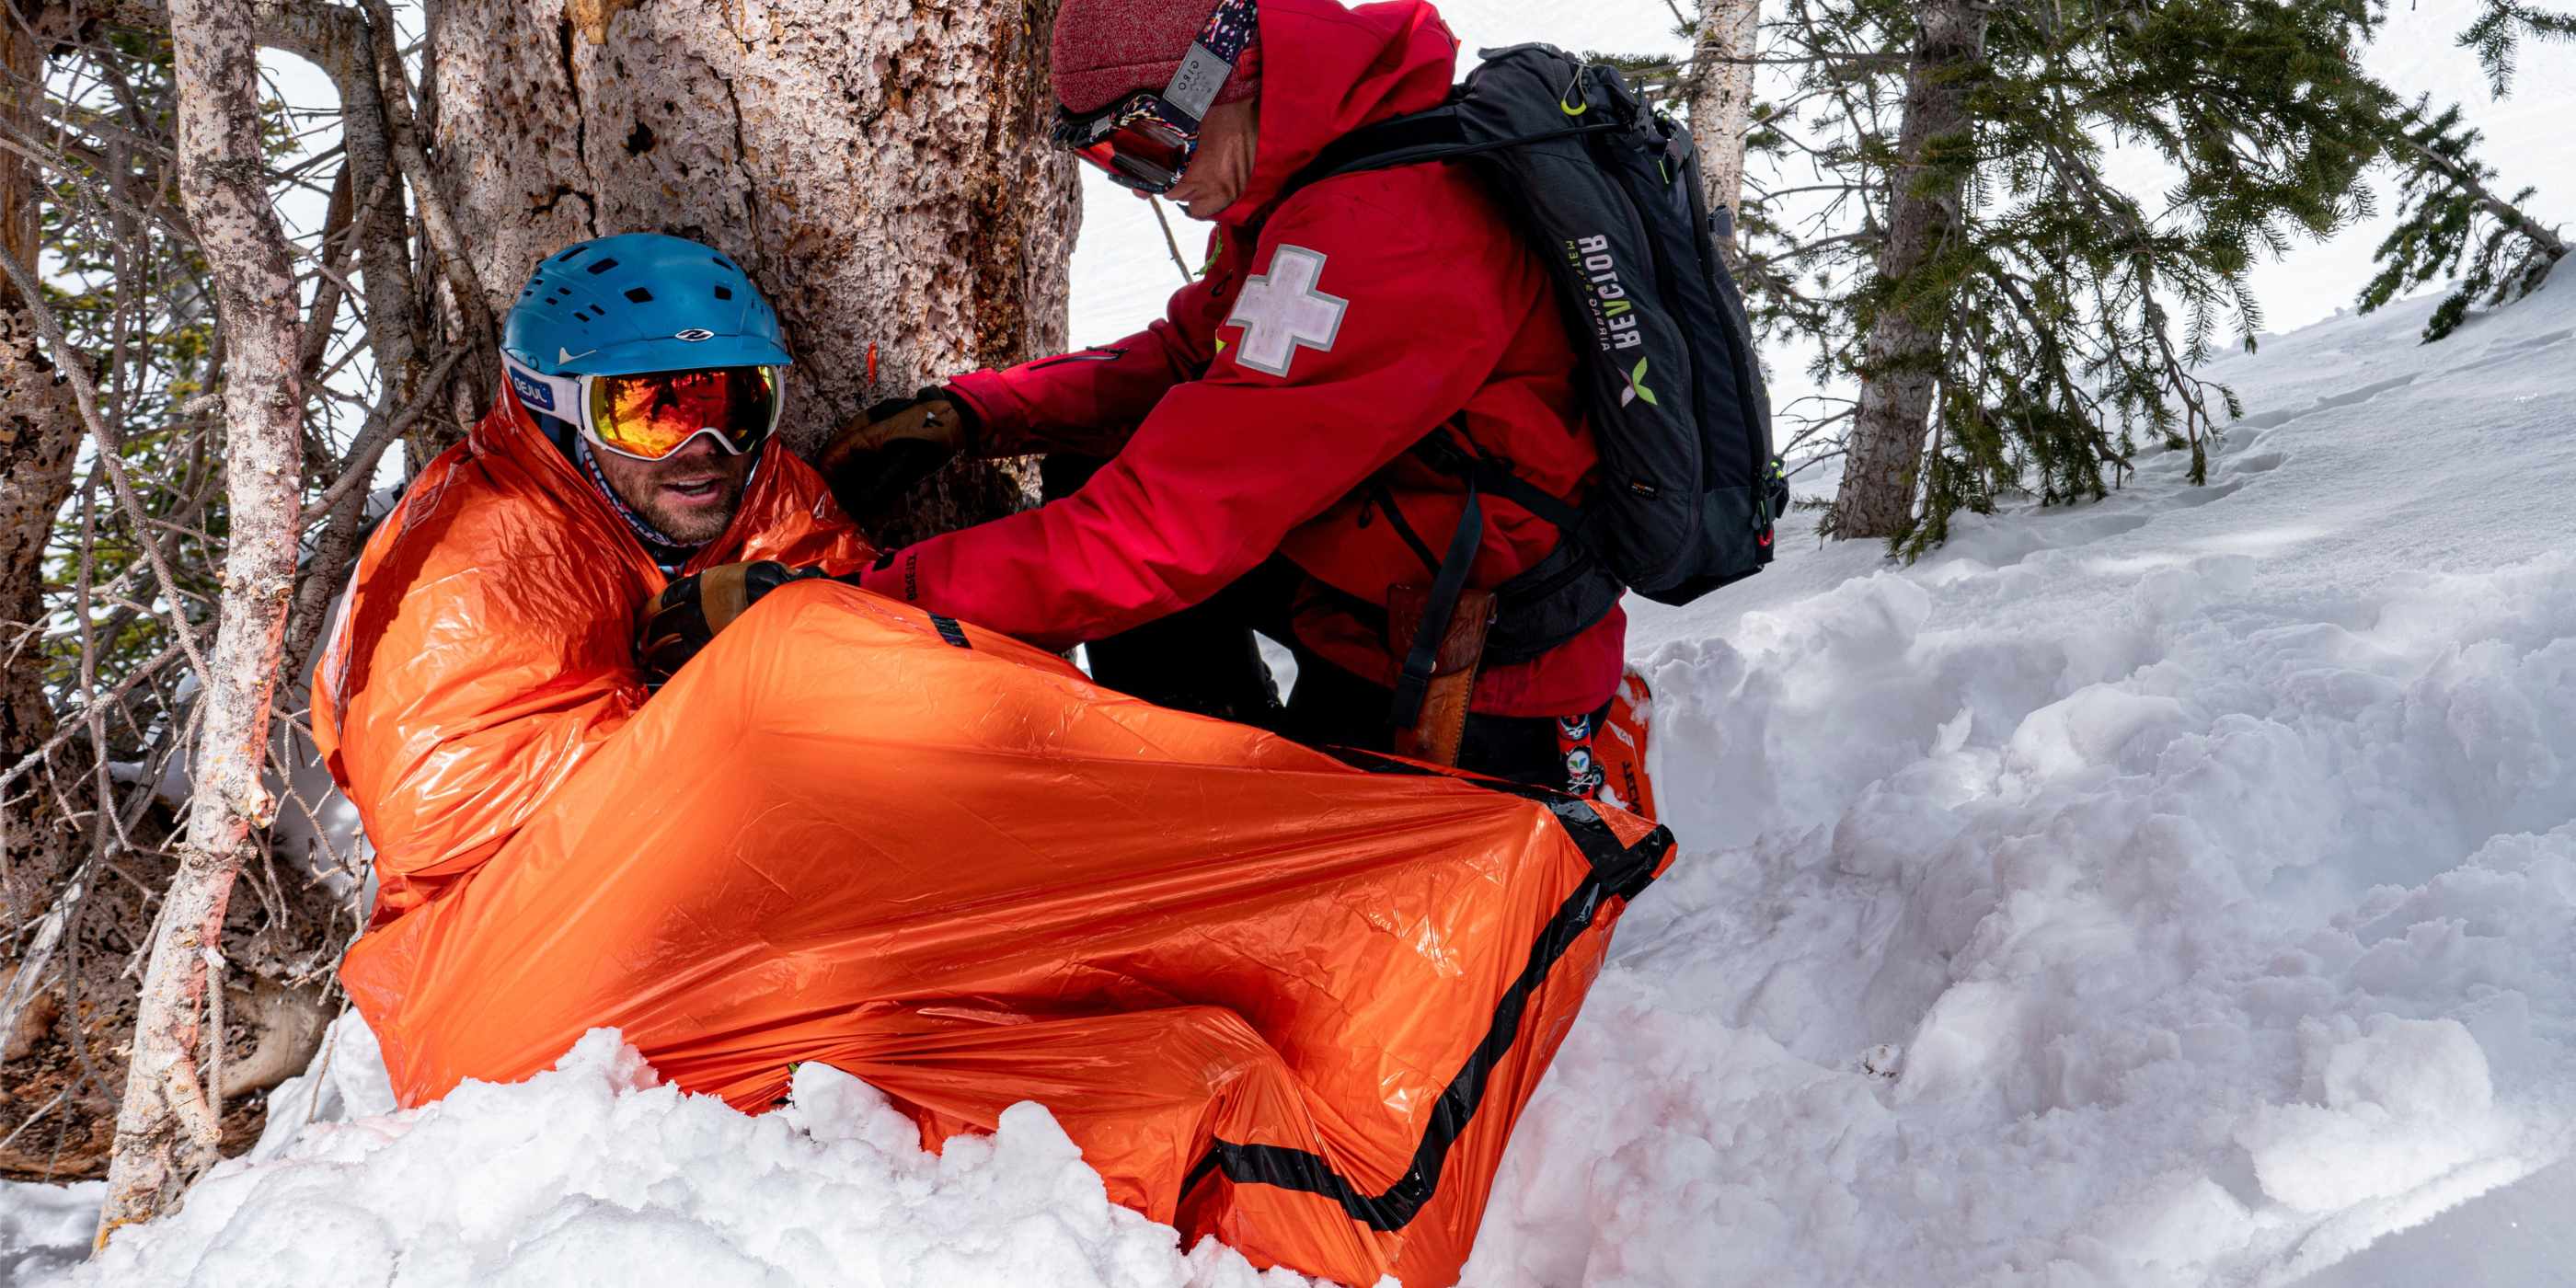 Ski Patrol Wrapping Injured Skier in Orange SOL Emergency Bivvy in Snow